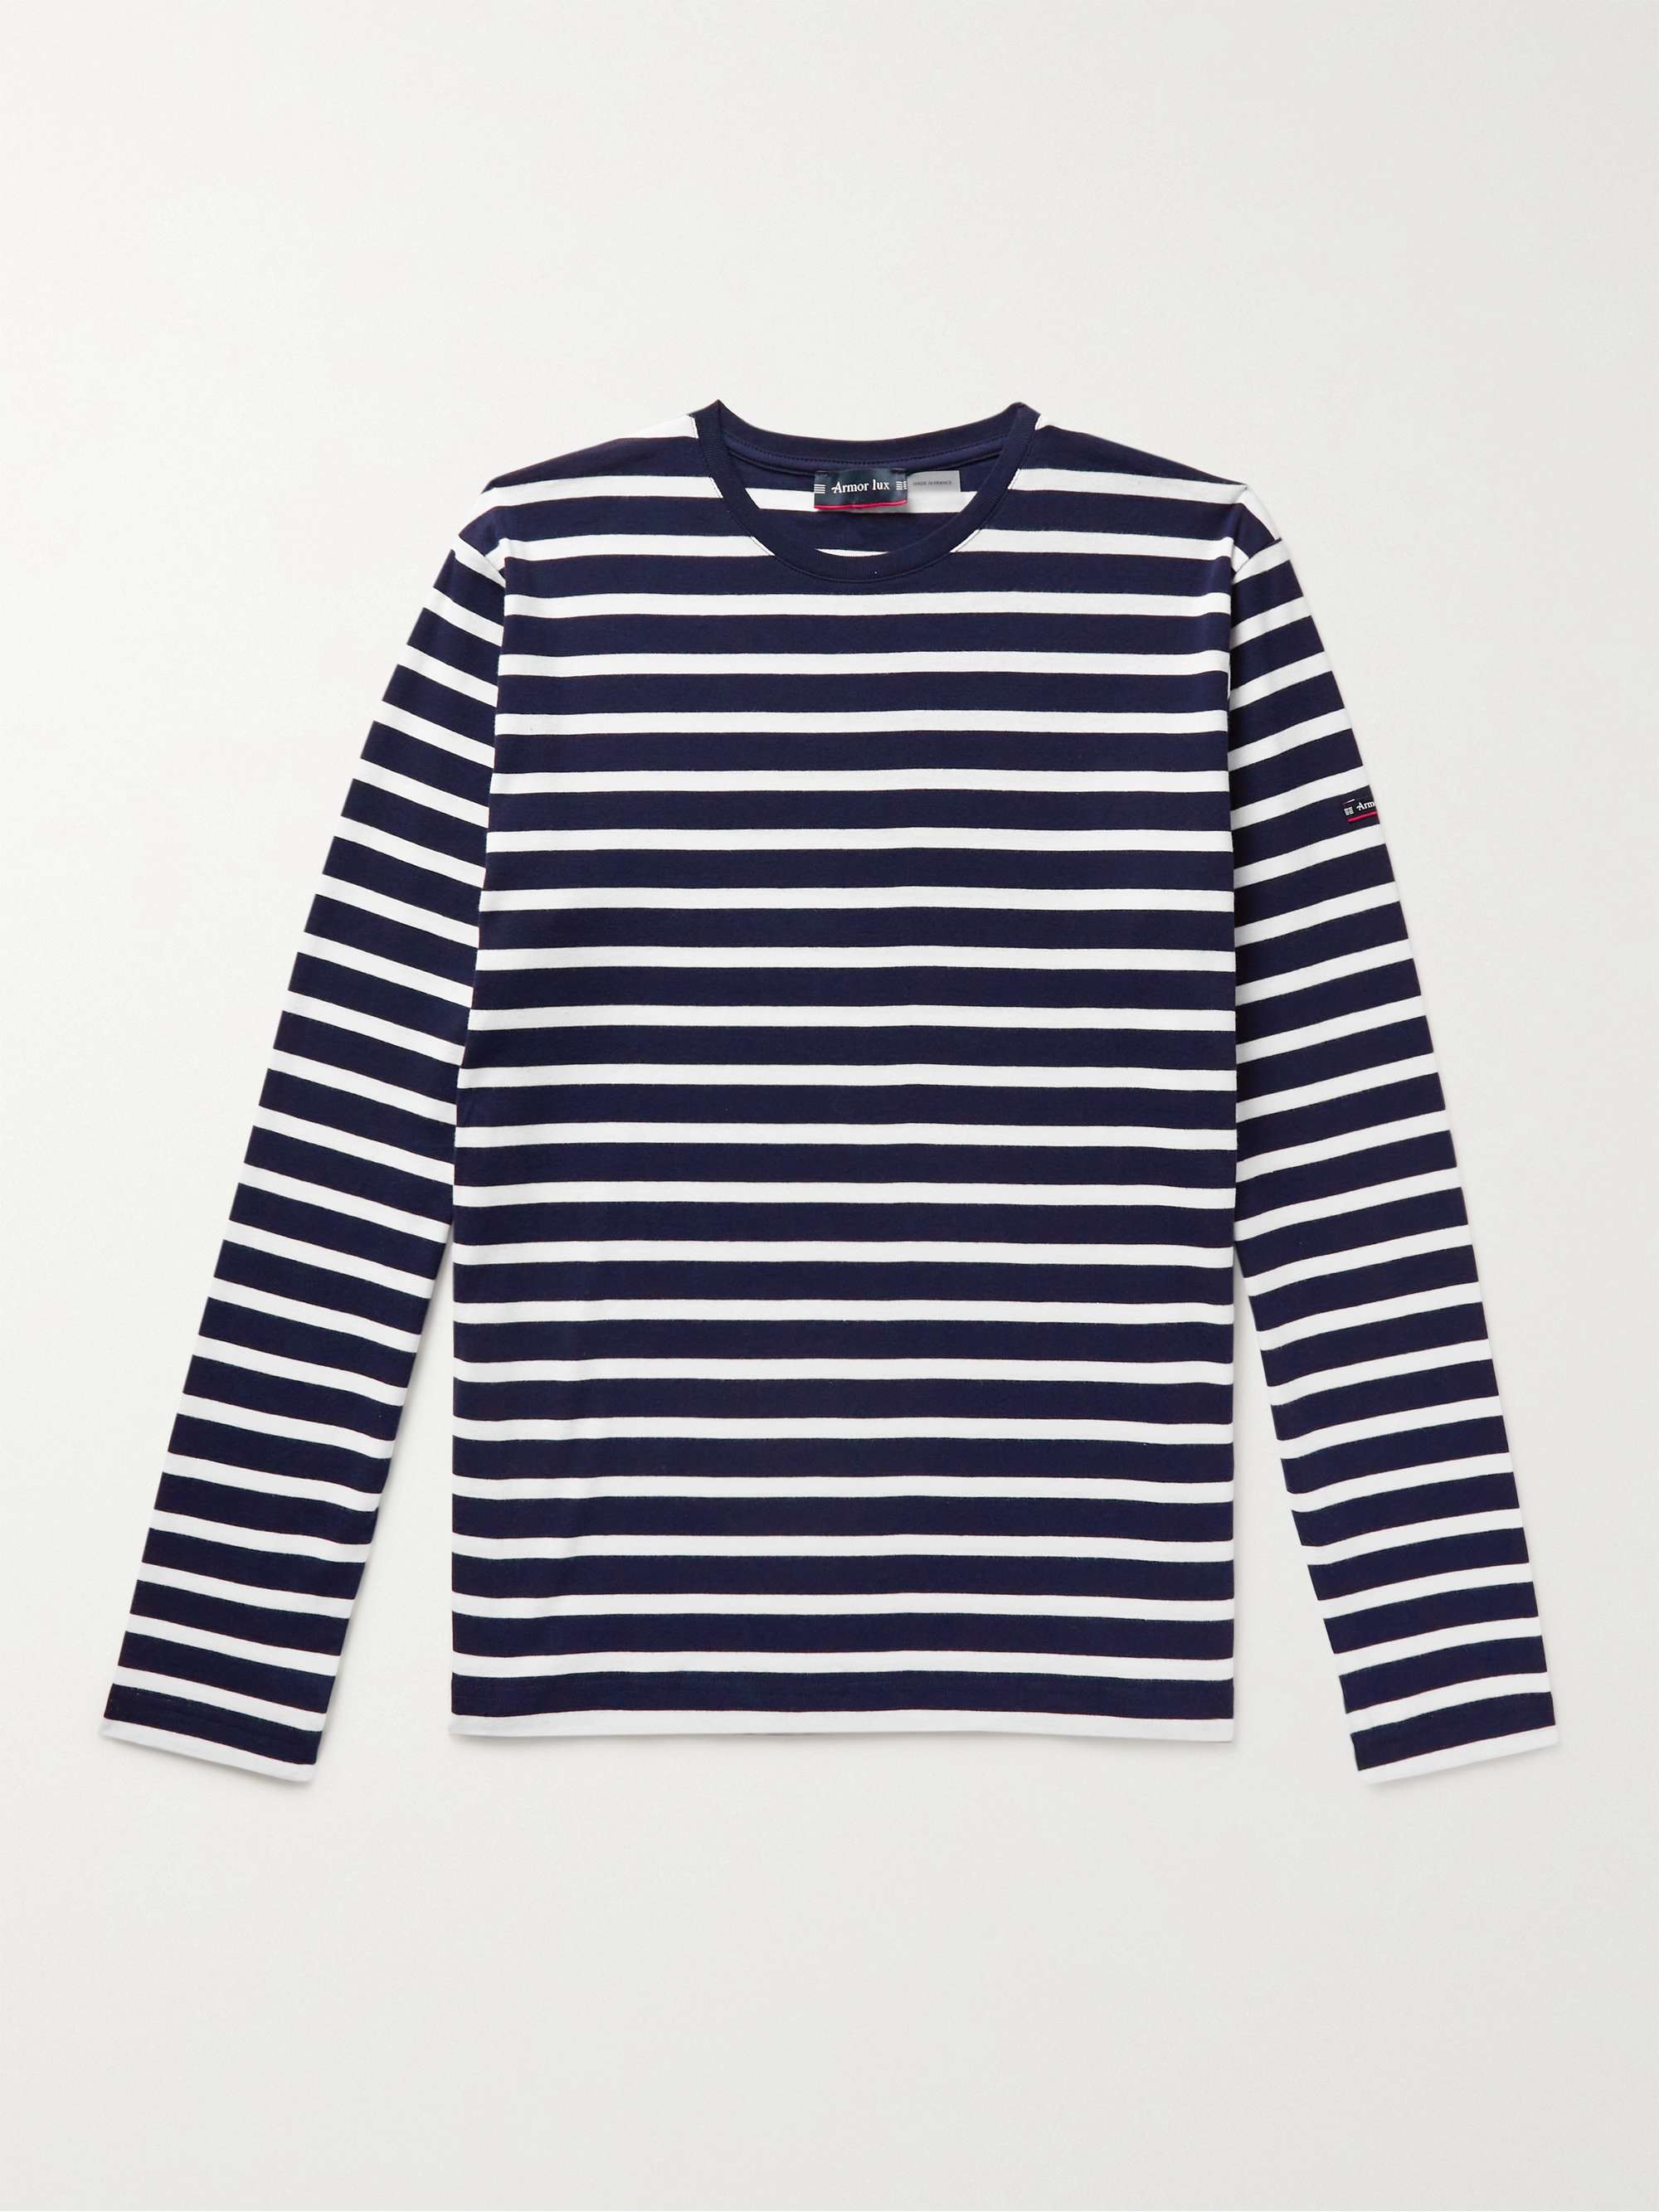 ARMOR-LUX Slim-Fit Striped Cotton-Jersey T-Shirt for Men | MR PORTER